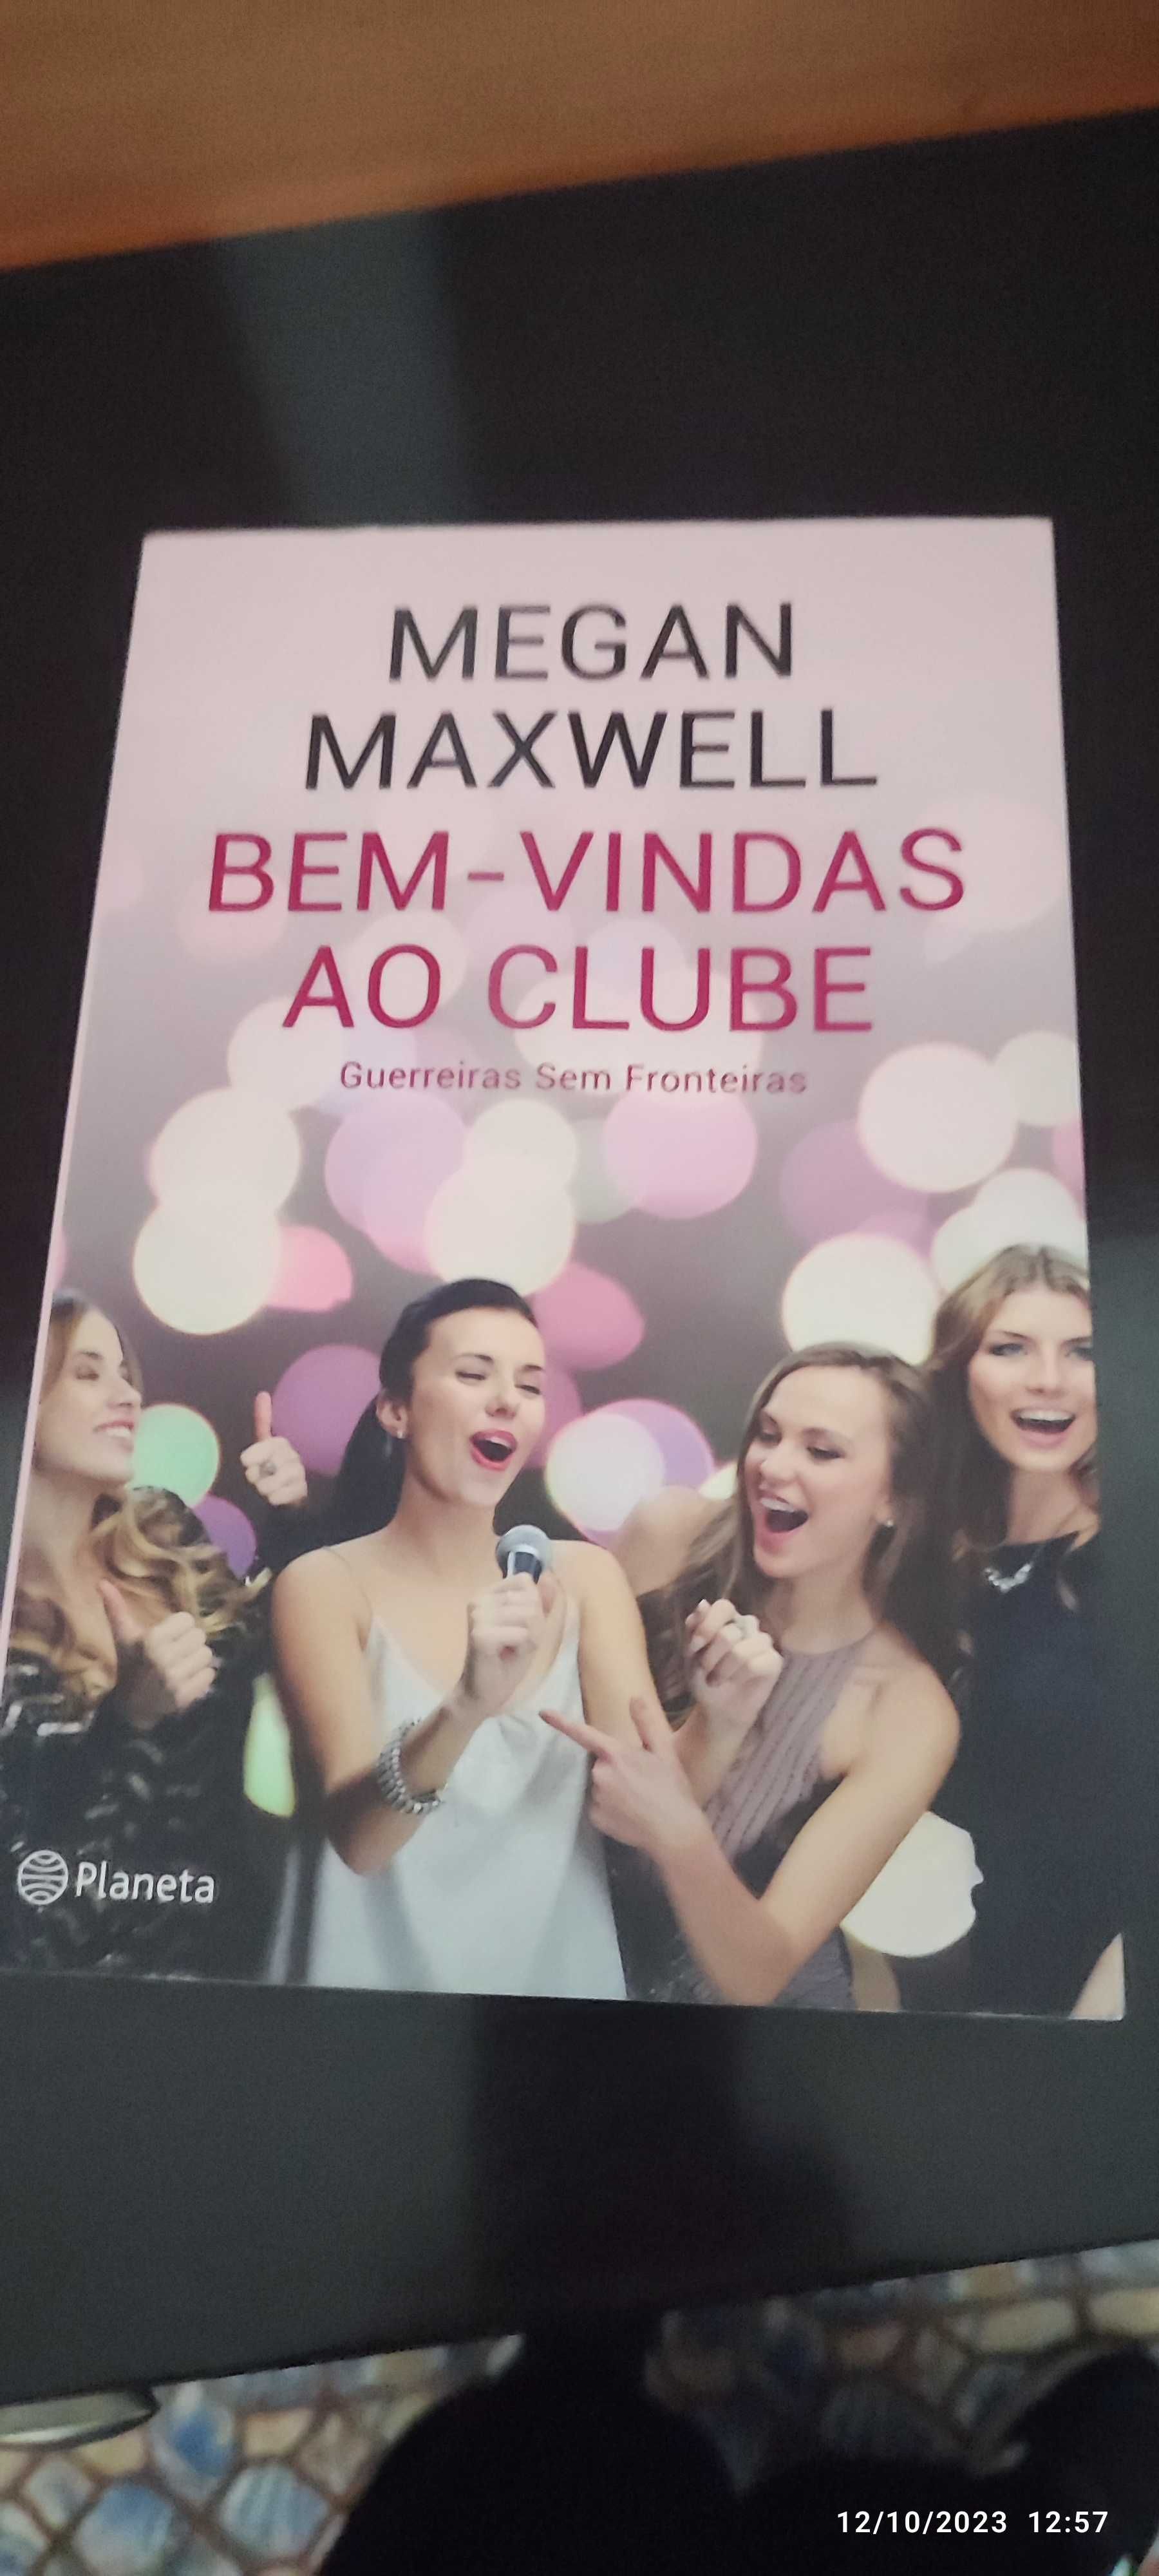 Bem vindas ao Clube Megan Maxwell